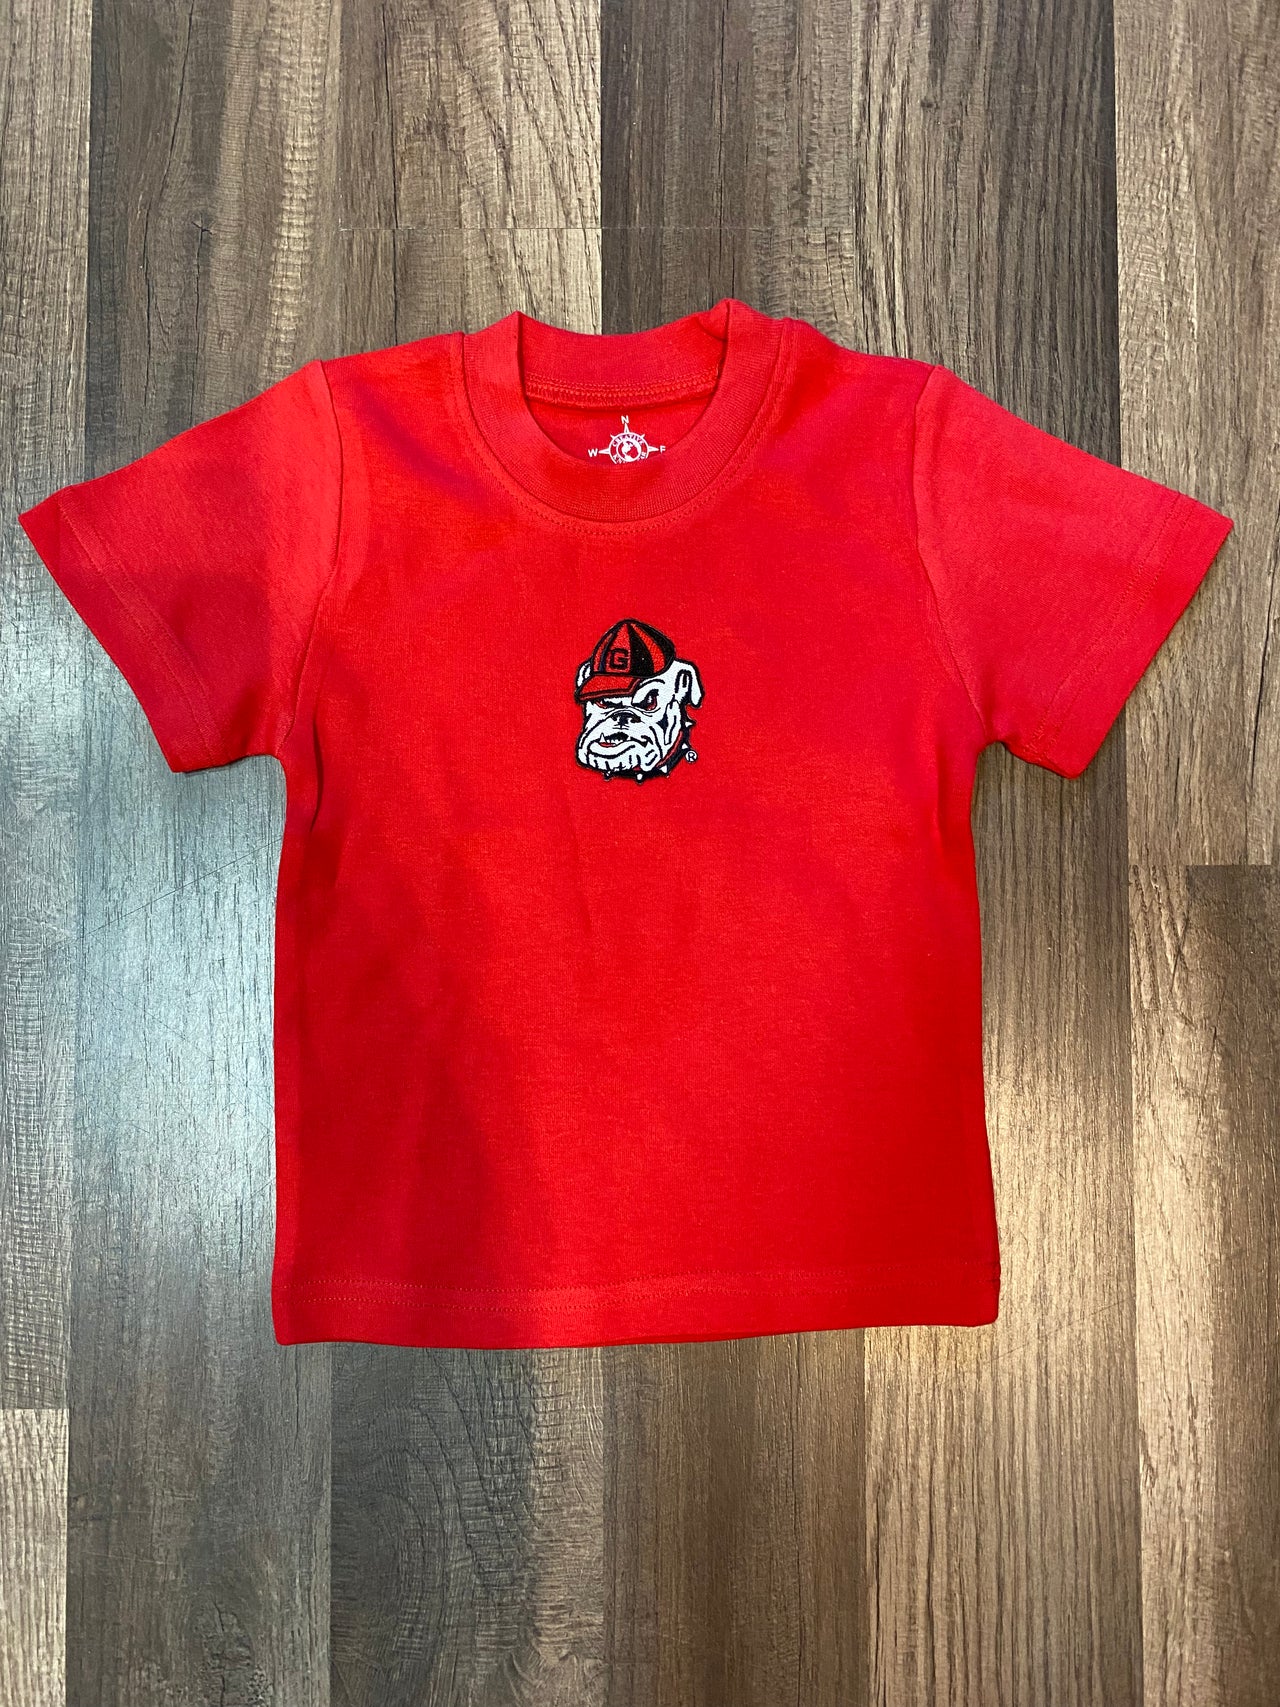 Toddler. Short Sleeve Tee. Red. UGA Bulldawg Logo